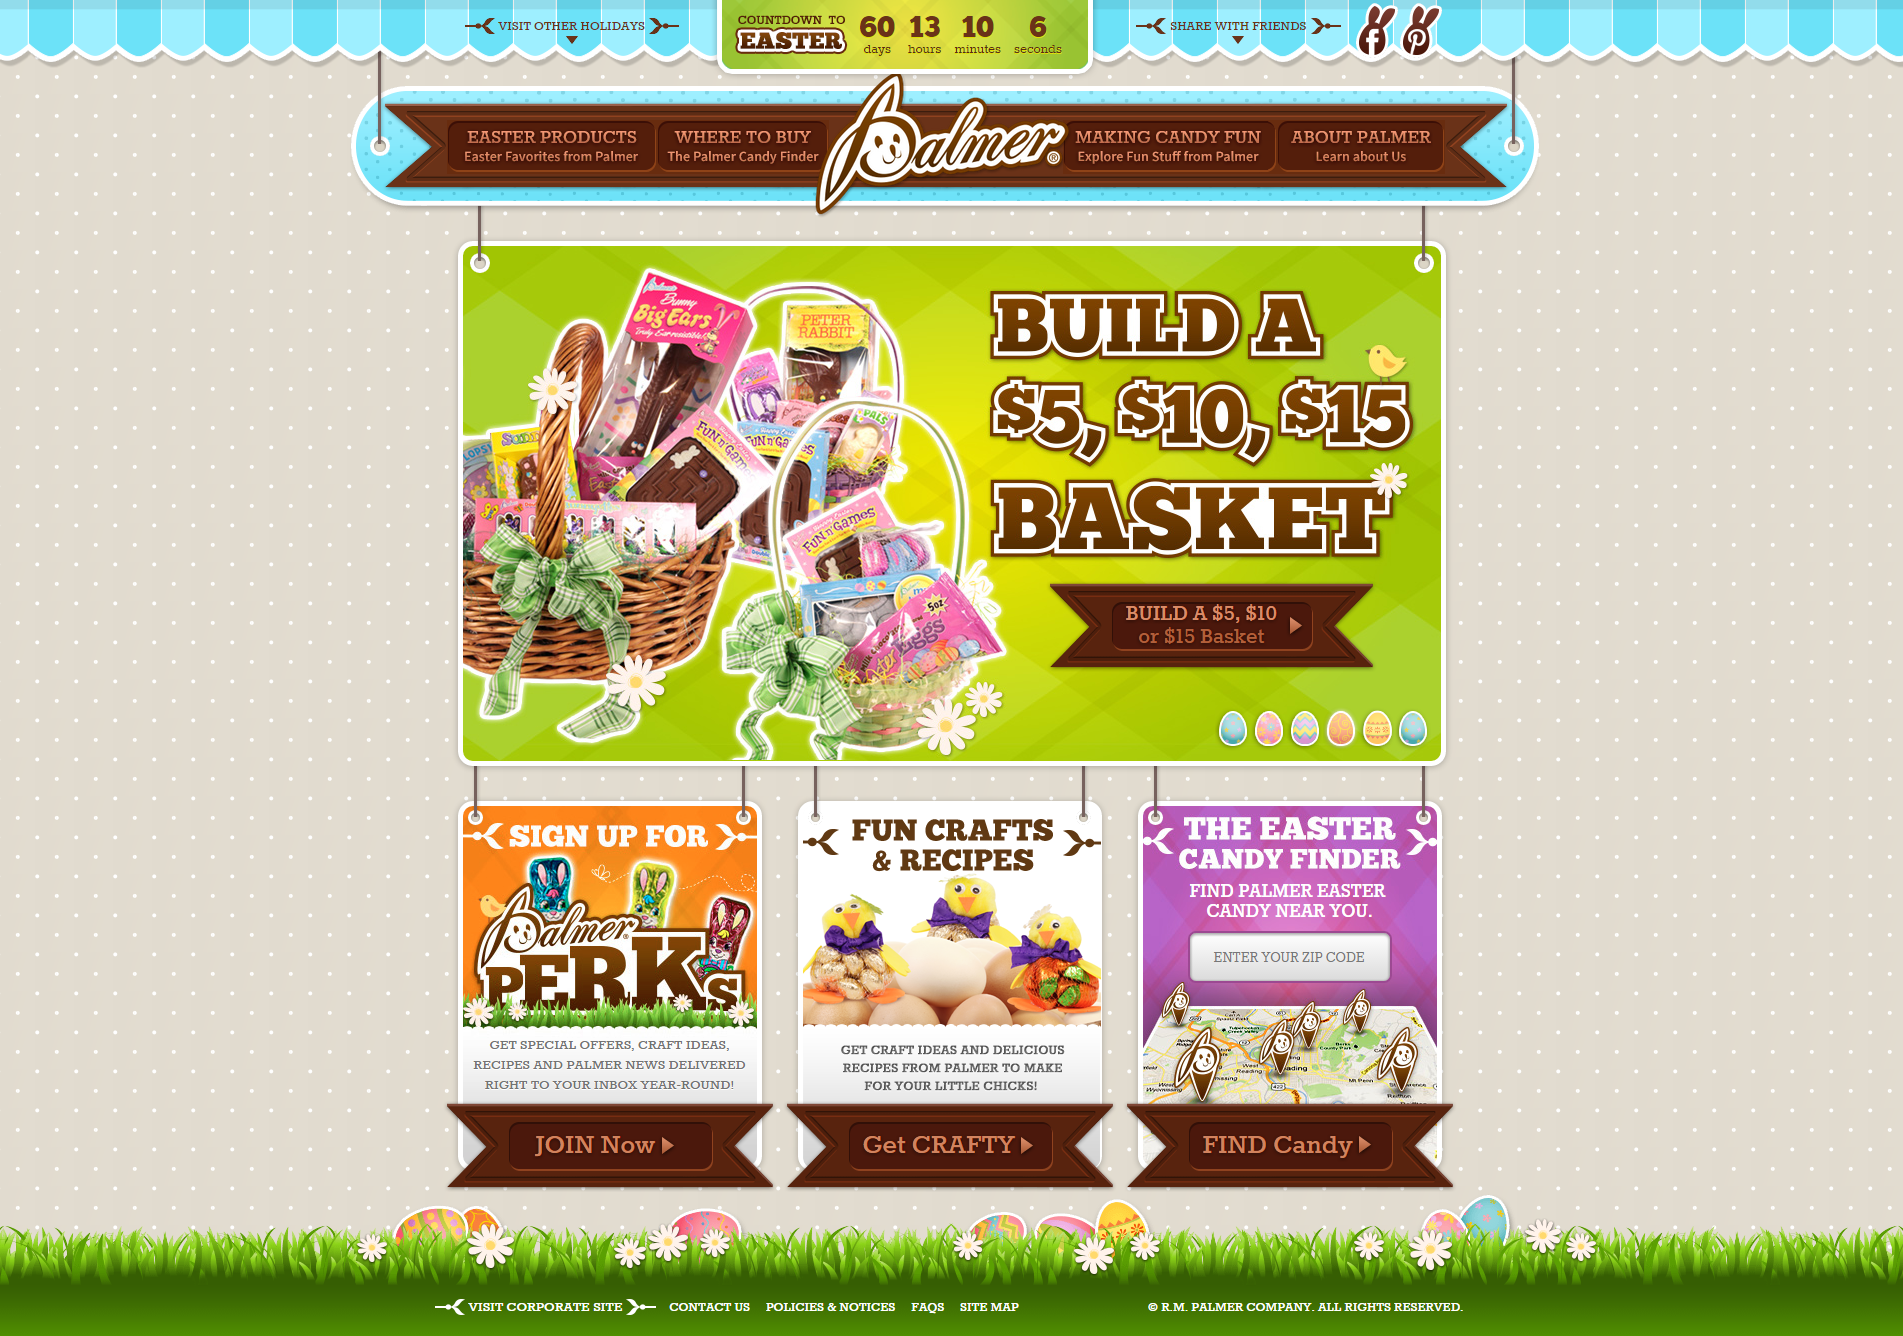 A convenient basket builder helps parents create the perfect arrangement based on their children's interests.